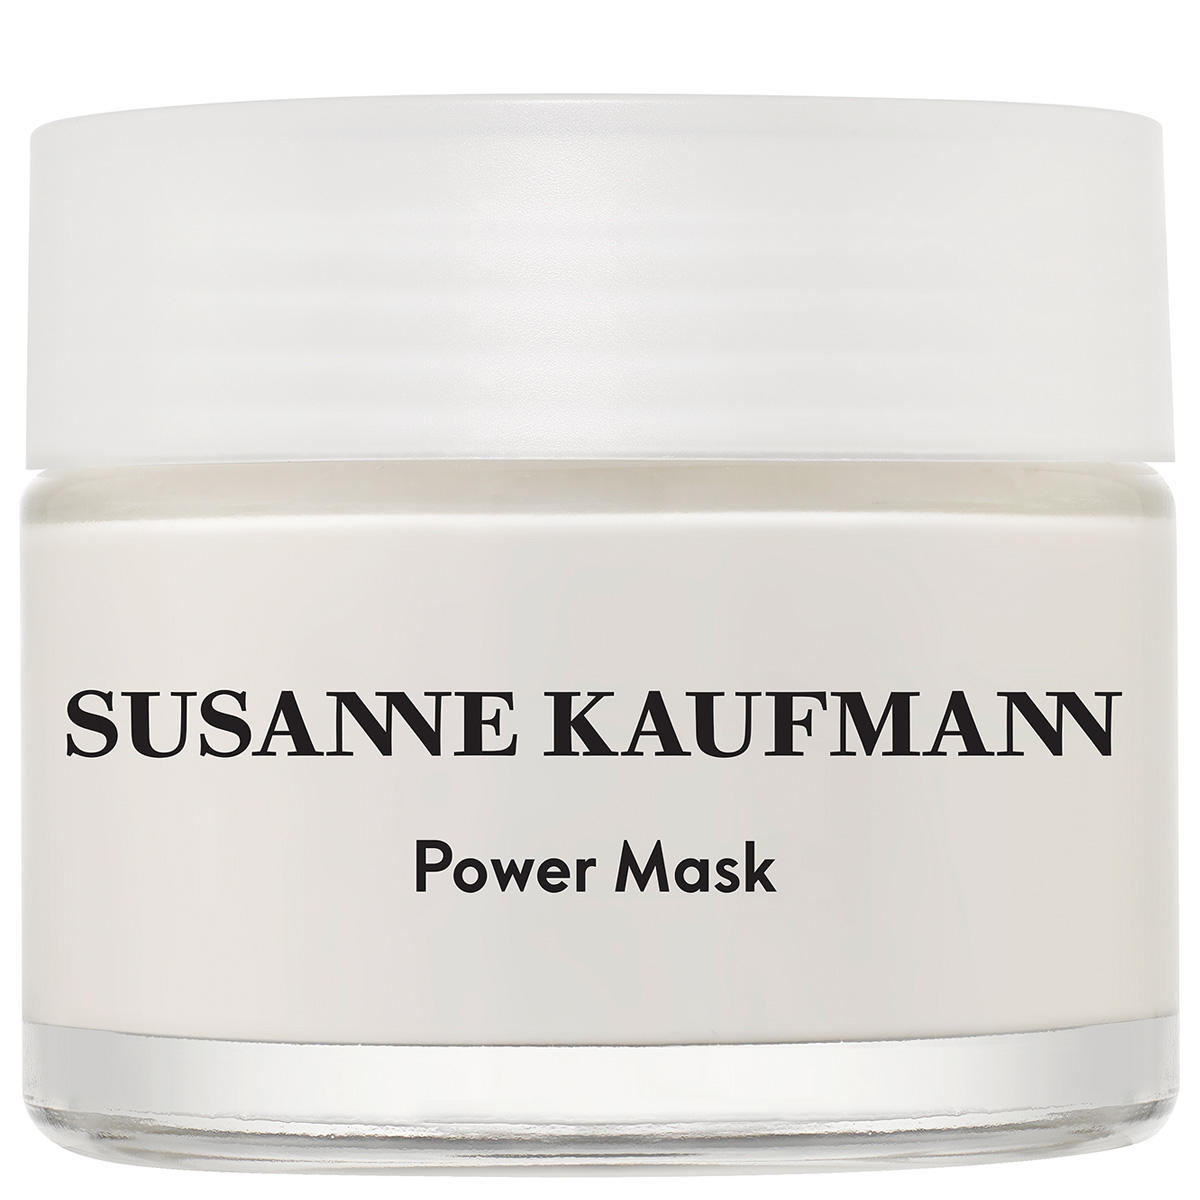 Susanne Kaufmann Liftingmaske Linie A - Power Mask 50 ml - 1